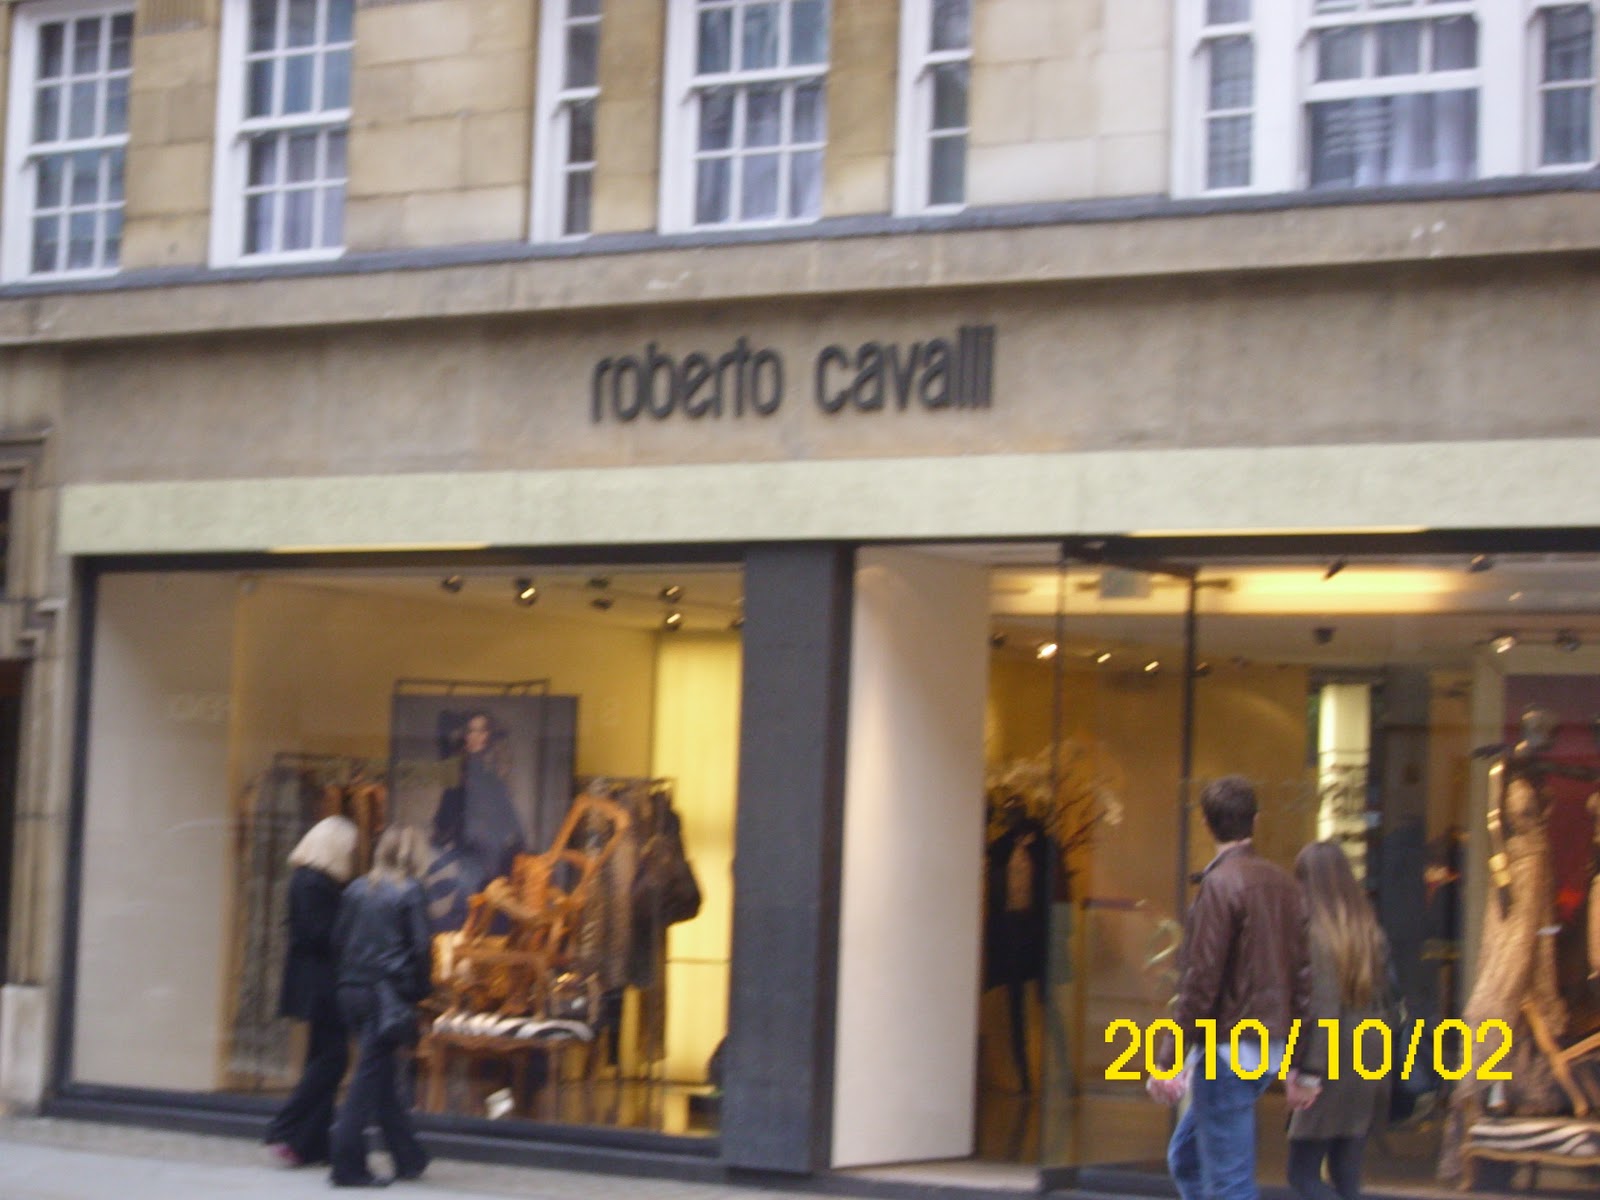 Emily's Blog.: Roberto Cavalli's Collection